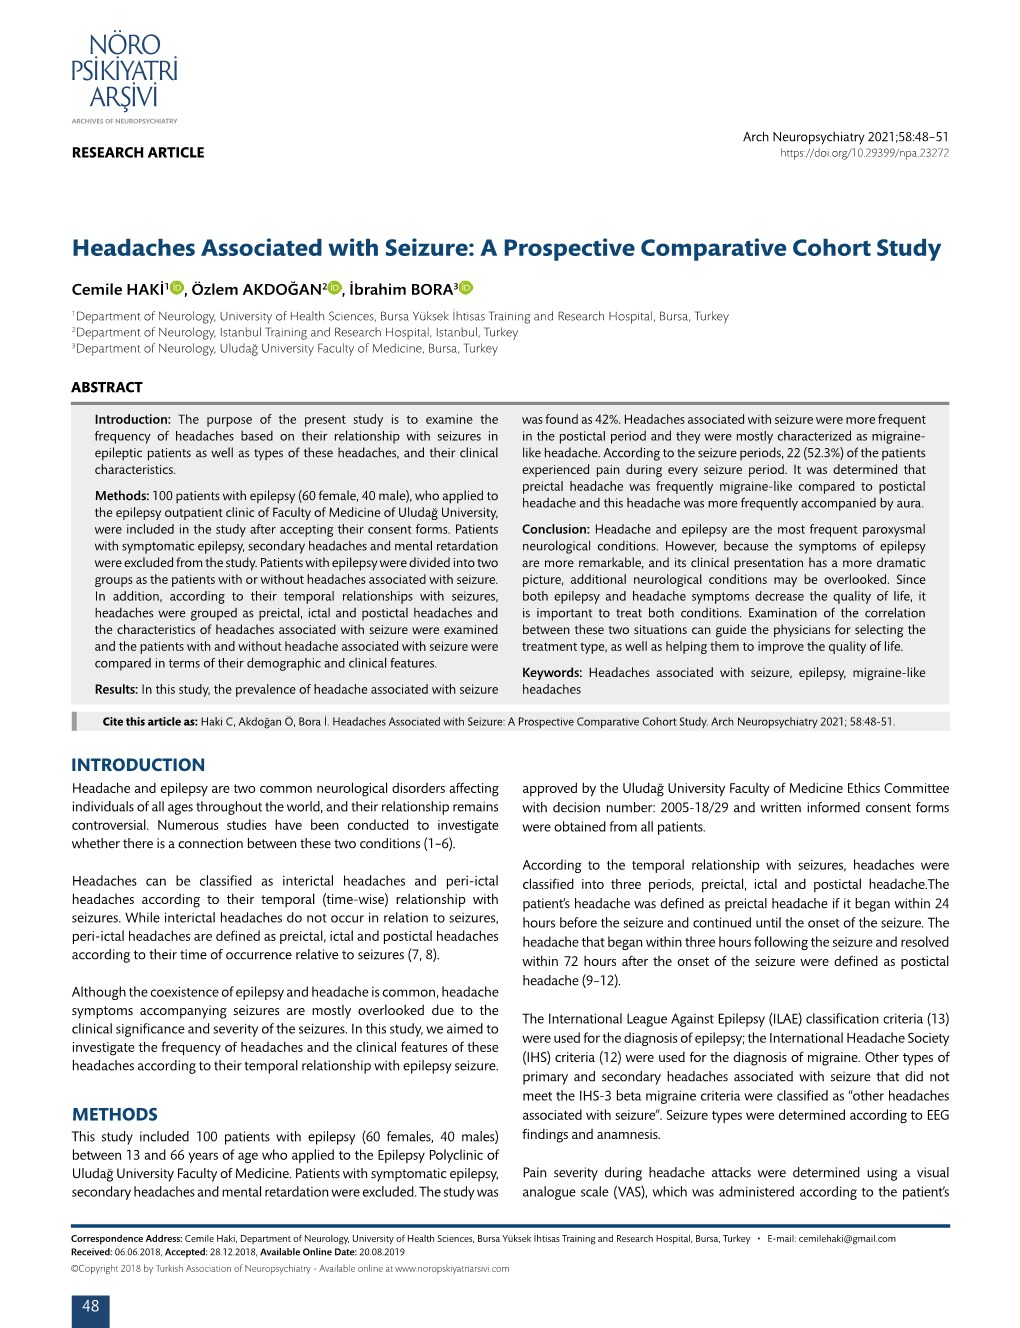 Headaches Associated with Seizure: a Prospective Comparative Cohort Study